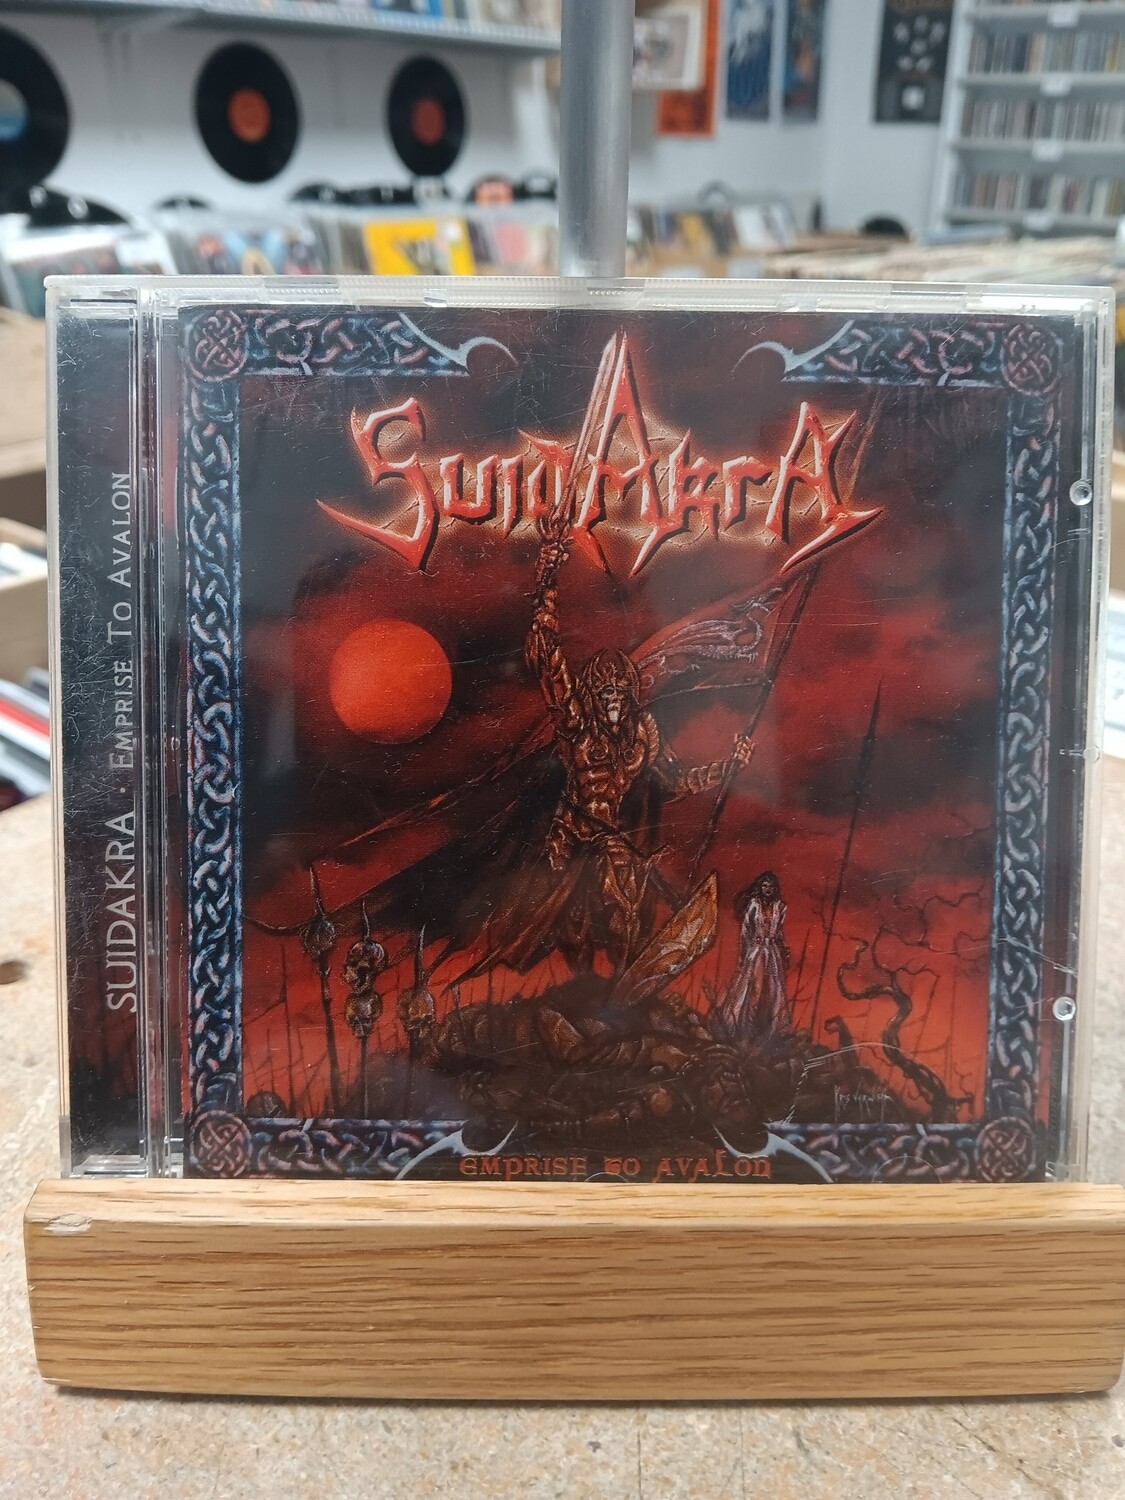 Suidakra - Emprise to Avalon (CD)